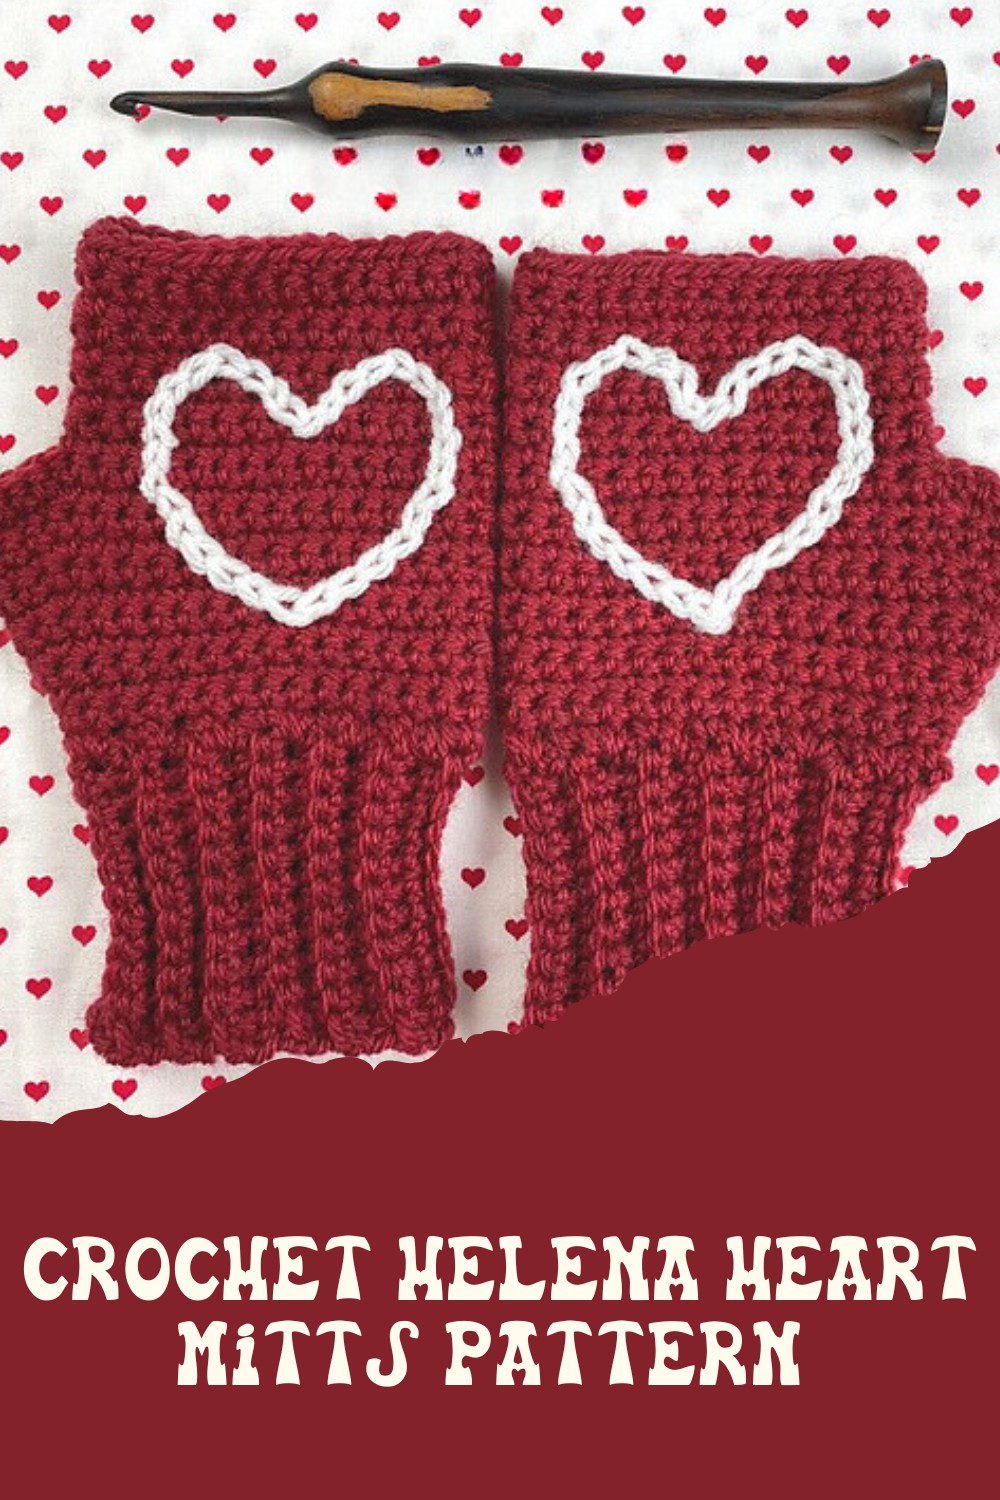  Crochet Helena Heart Mitts Pattern
